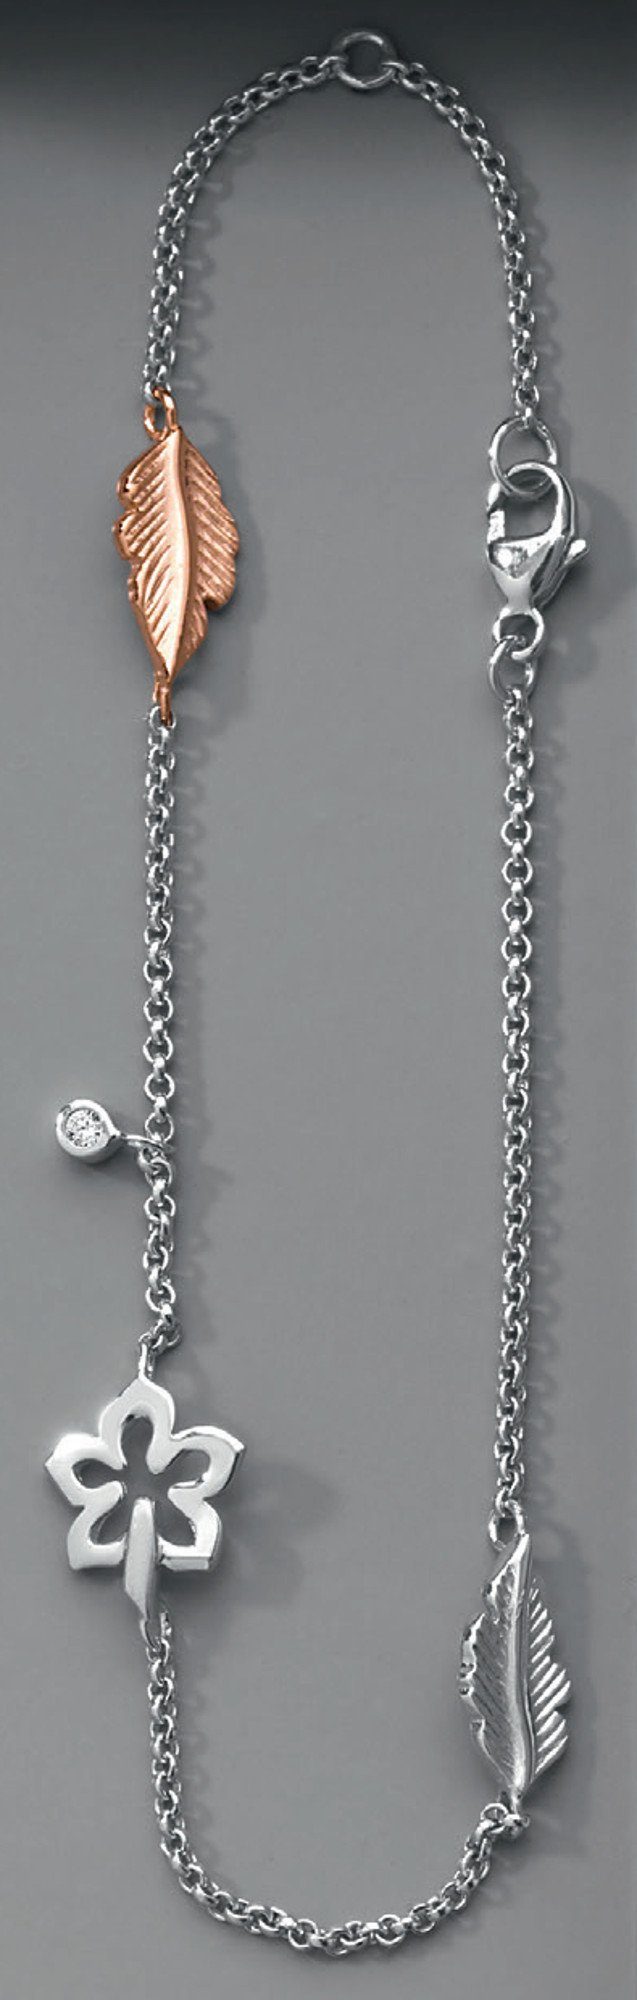 ONE ELEMENT Silberarmband Zirkonia Feder & Blume Armband aus 925 Silber 19 cm Ø, Damen Silber Schmuck Feder & Blume